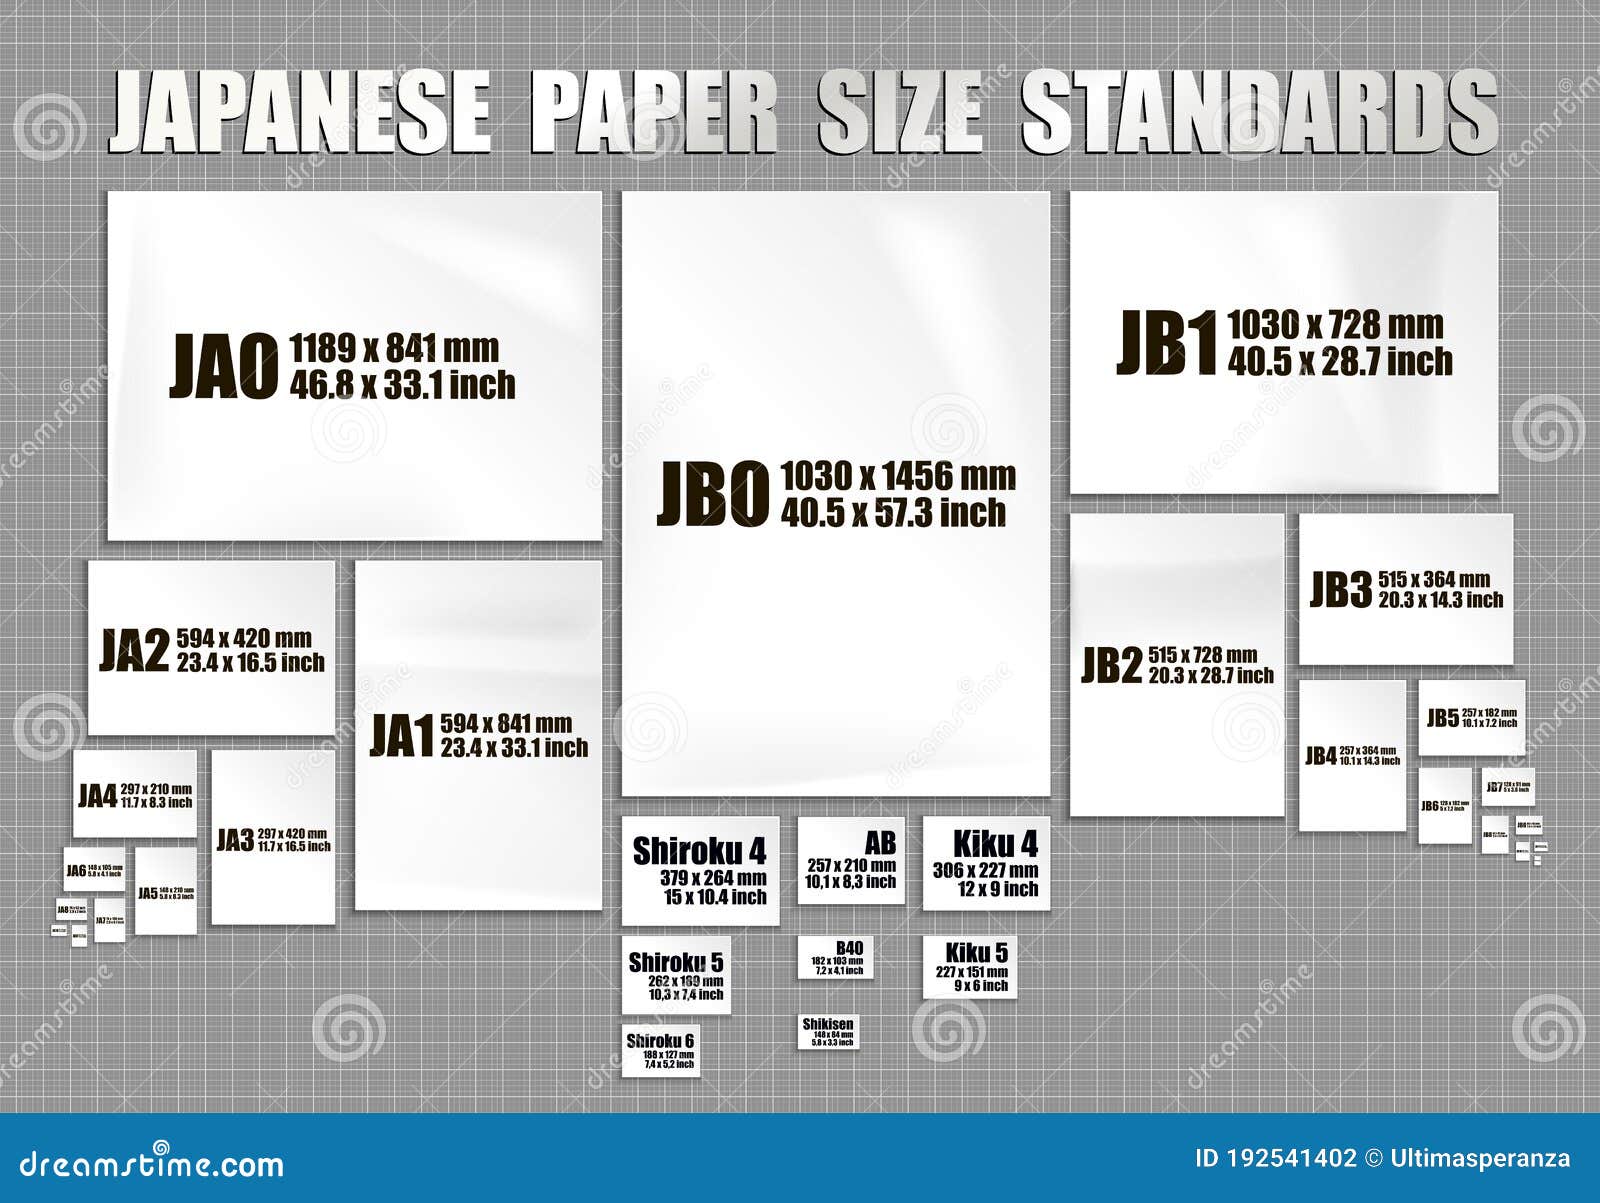 Full Set of Japanese Paper Sheets Standards of Series JIS a, JIS B ...